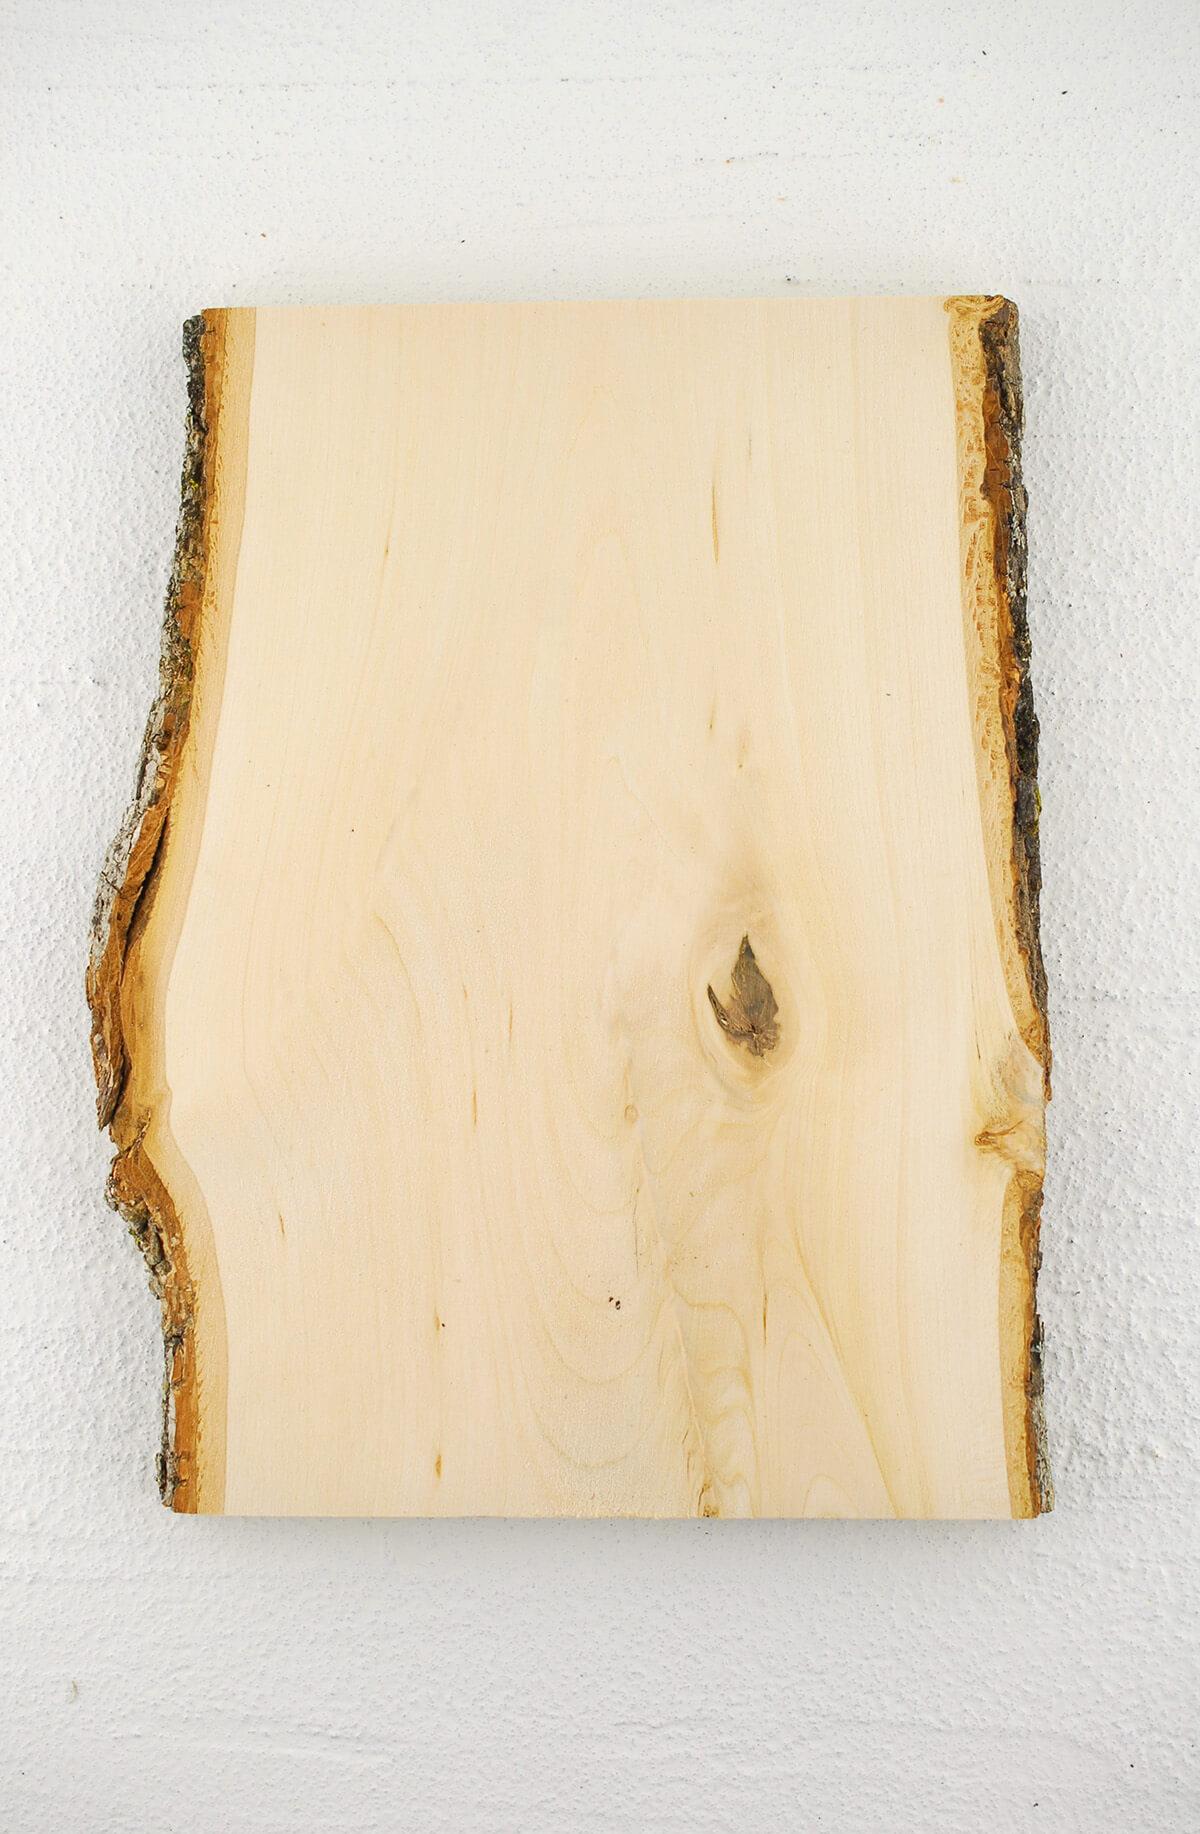 Large Log Slice/ Wood Slab With Bark 19 to 20 plus x 2 Inch